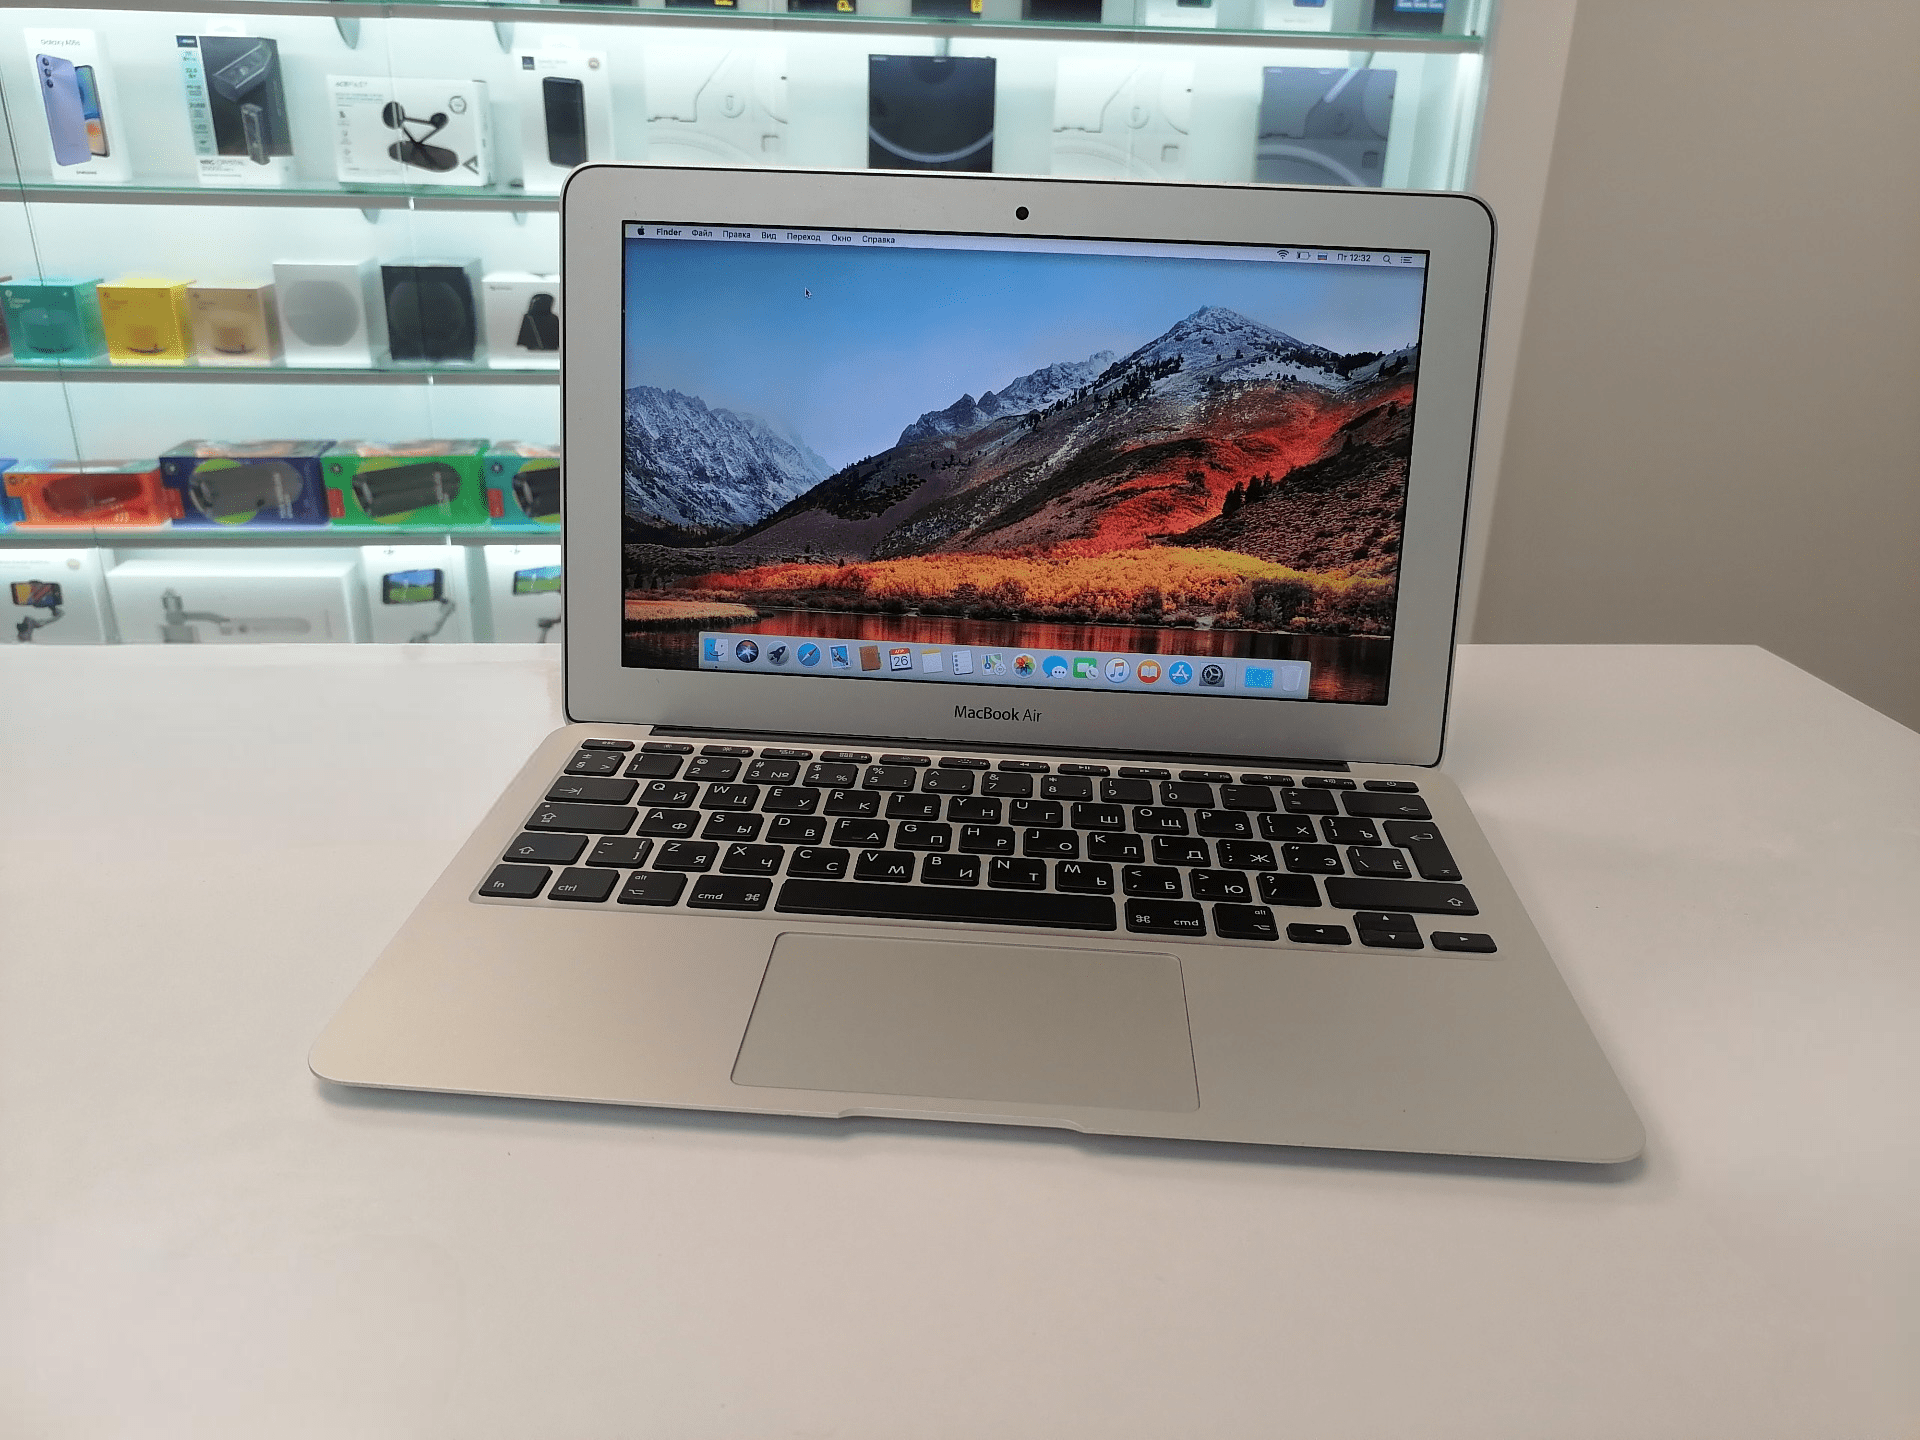 MacBook Air 11,6 i5, 1,4ГГц, 8Gb, 128Gb SSD (без коробки) - Б/У 277 циклов